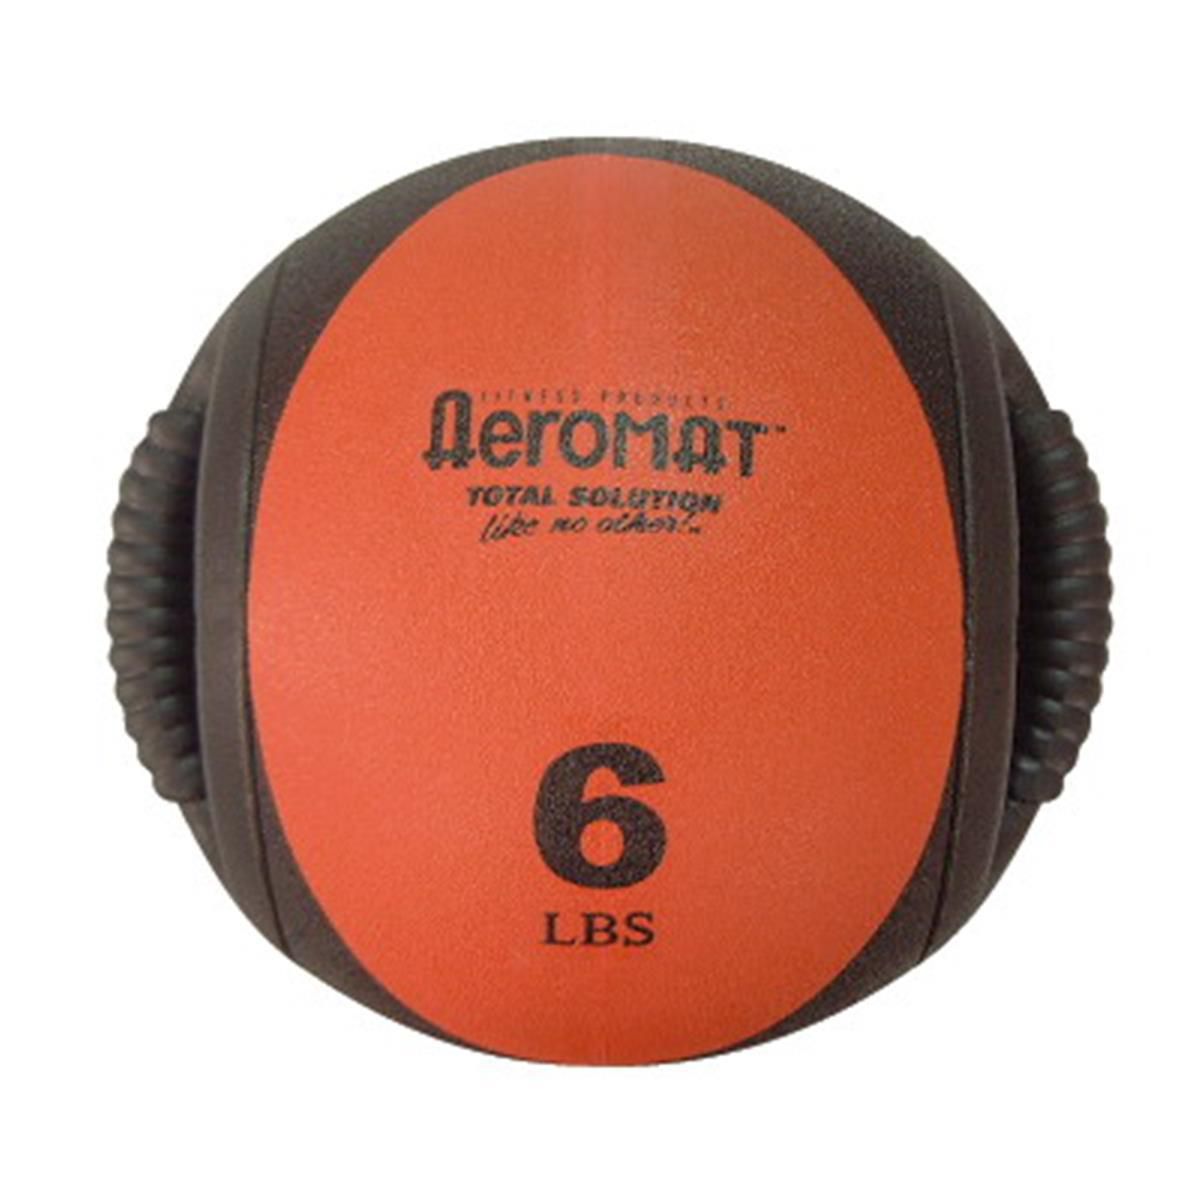 Aeromat 35131 Dual Grip Power Med Ball - черно-красный Aeromat